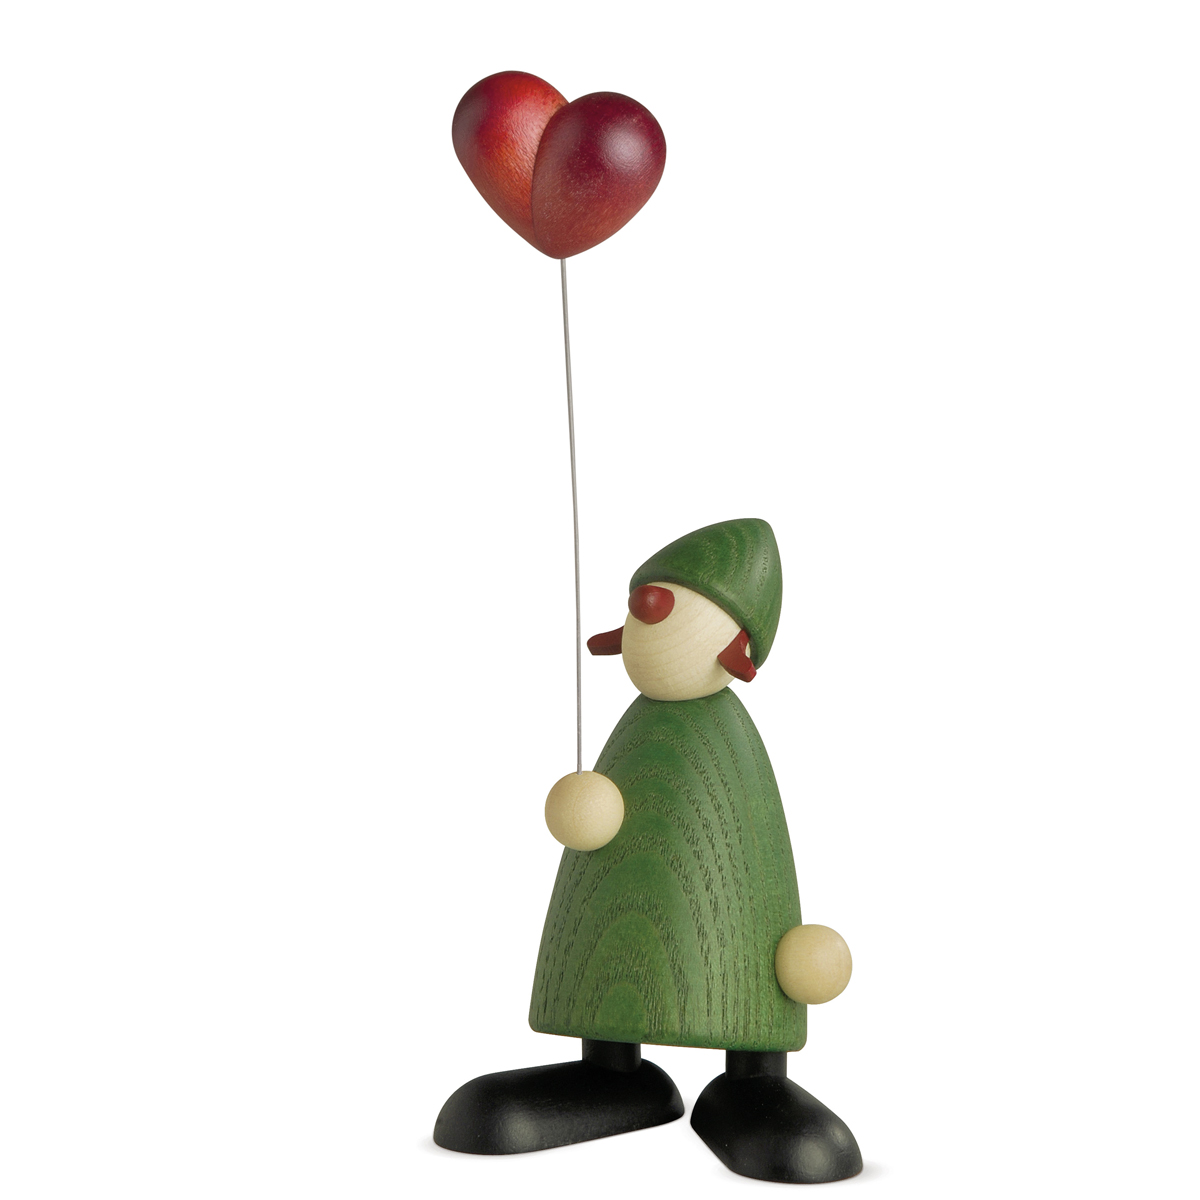 Gratulantin Milena mit rotem Herzballon, klein, grün